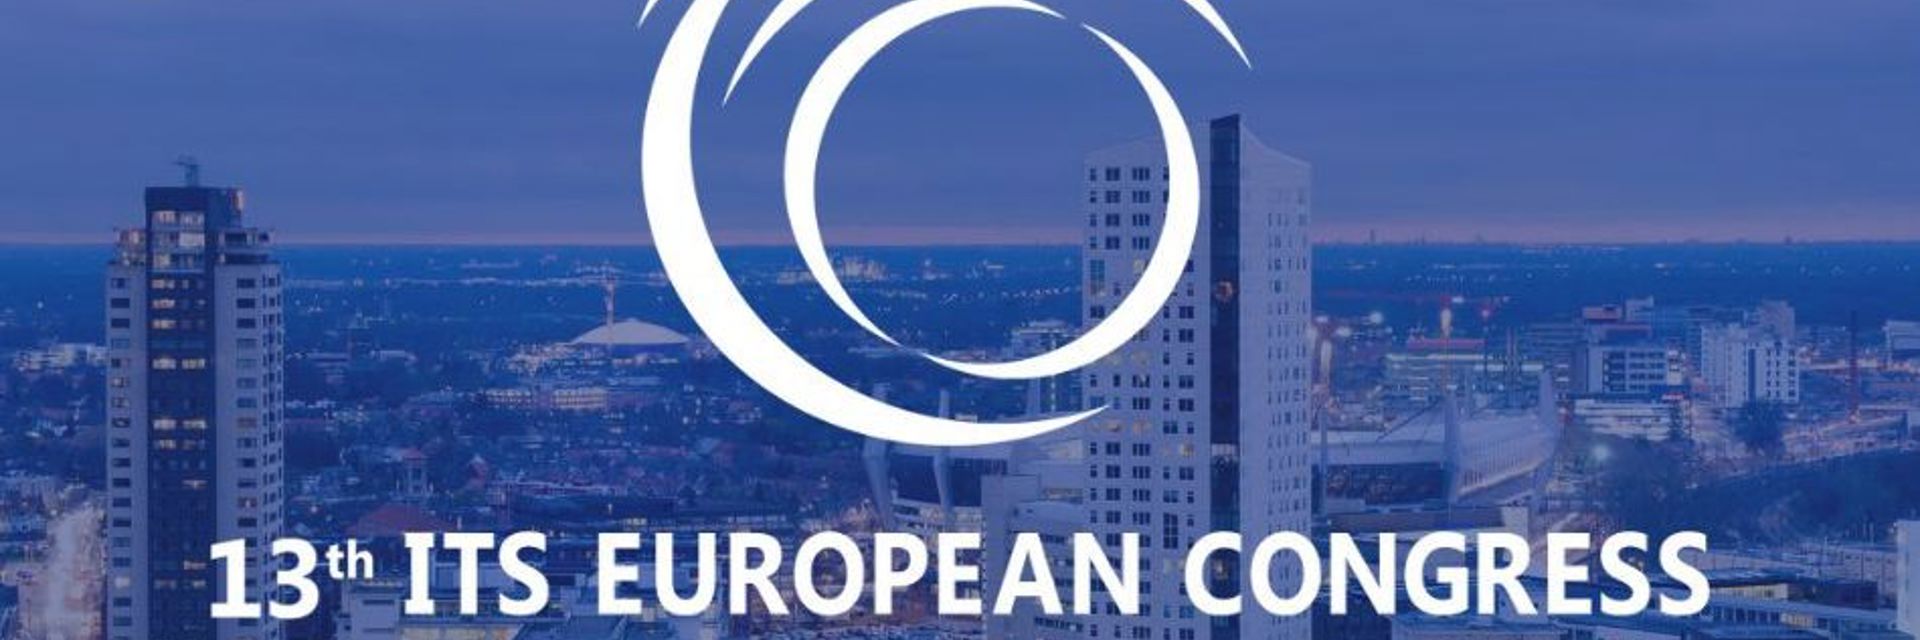 Foto 13th ITS European Congress - fulfulling its promises - 3-6 june 2019.jpg